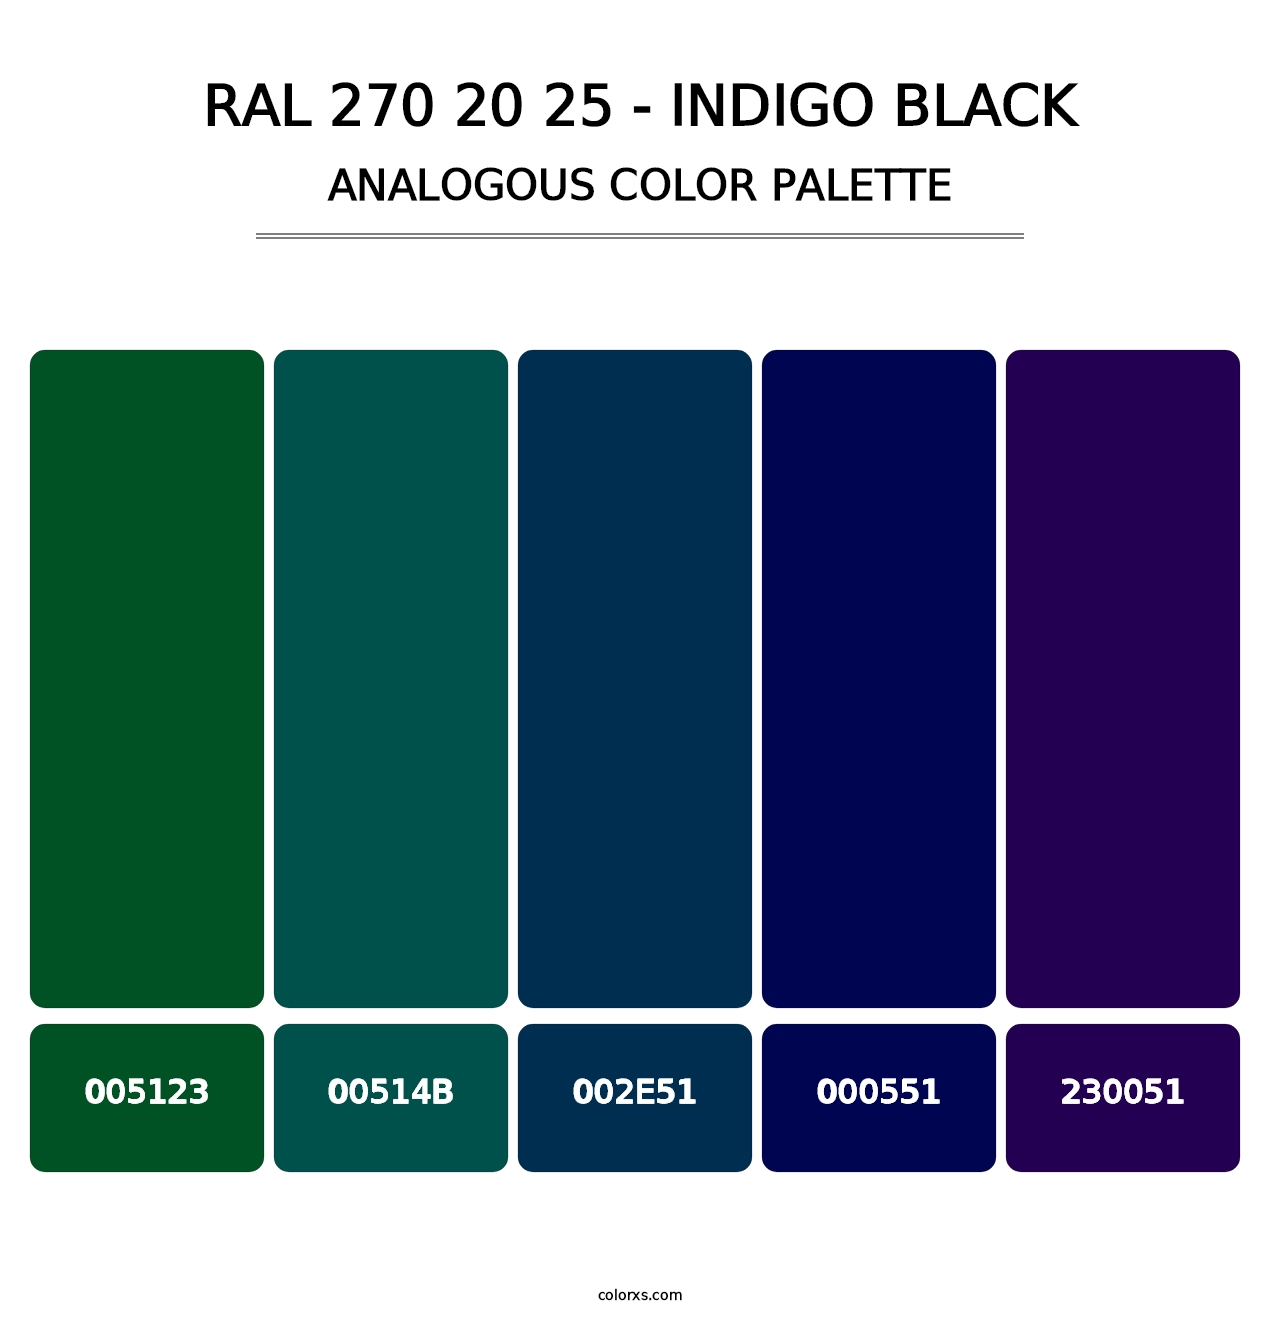 RAL 270 20 25 - Indigo Black - Analogous Color Palette